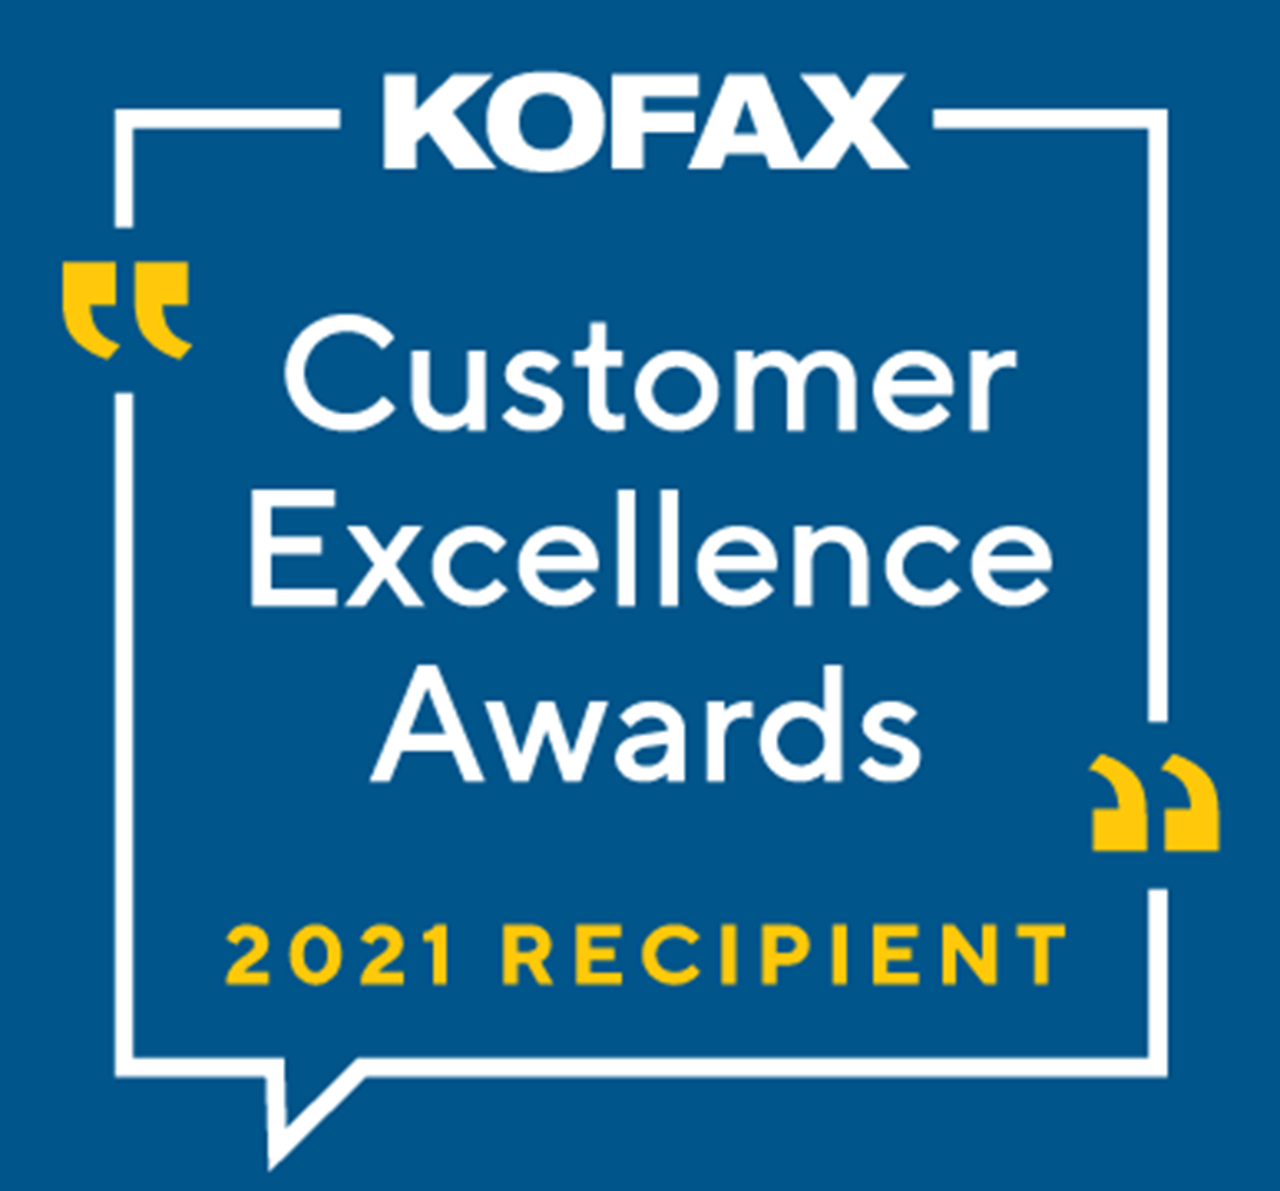 The Kofax Customer Excellence Awards